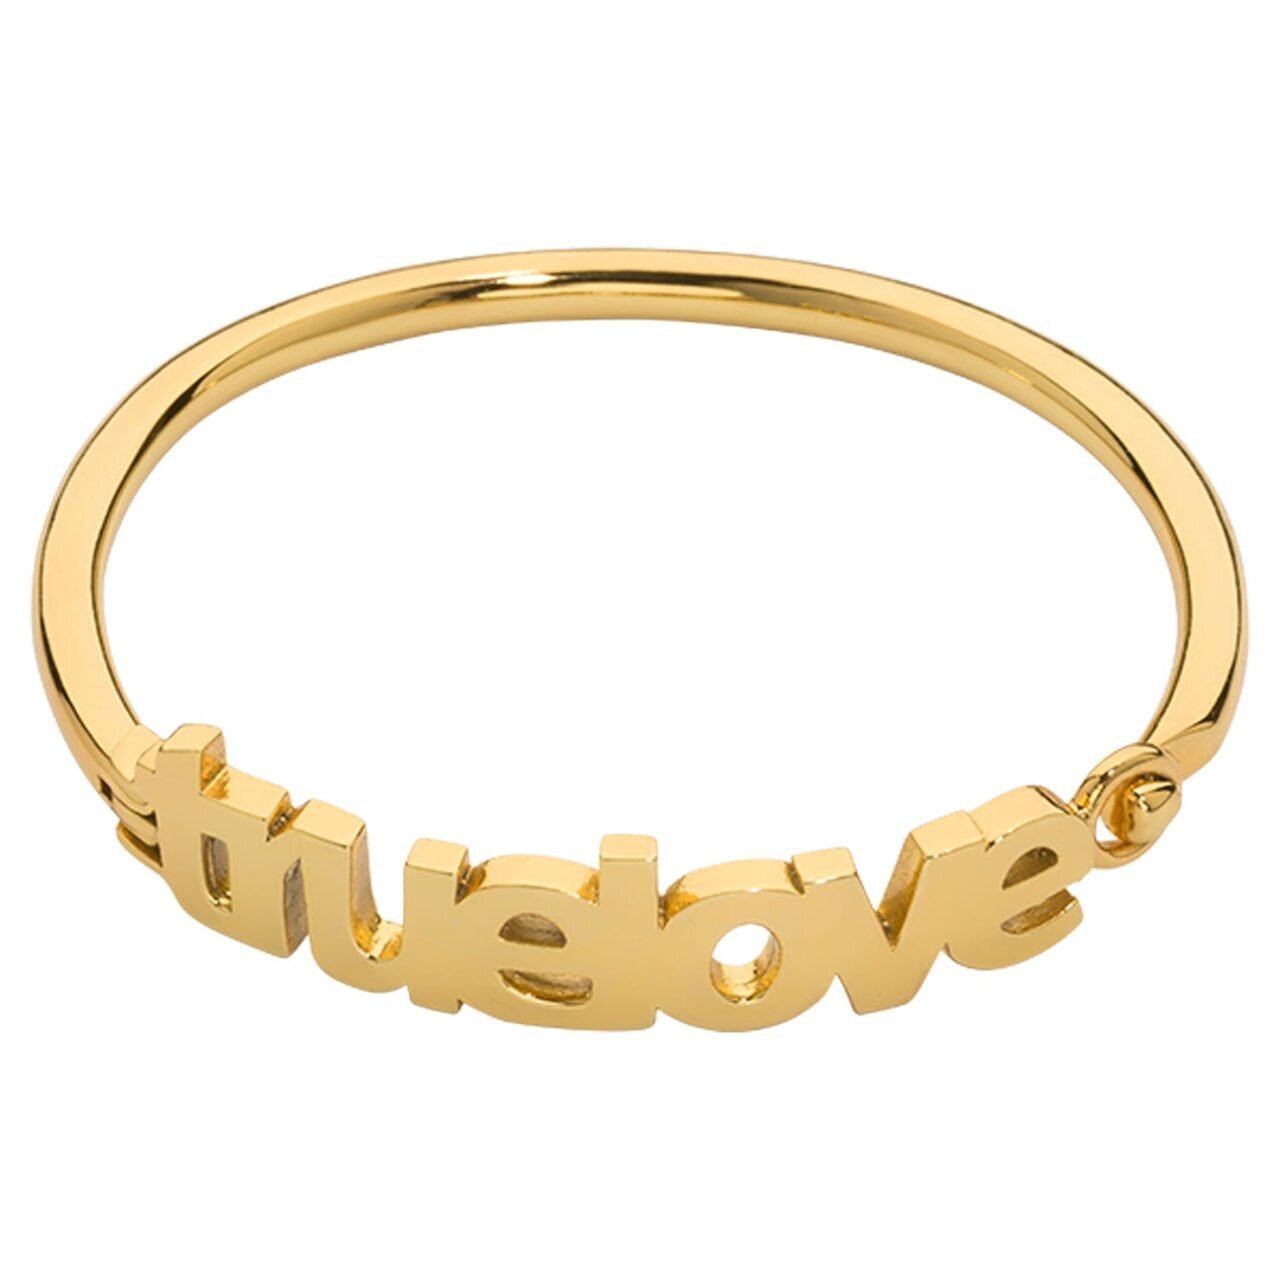 Nikki Lissoni Bracelet with True Love Tag Gold-plated 17cm B1134G17